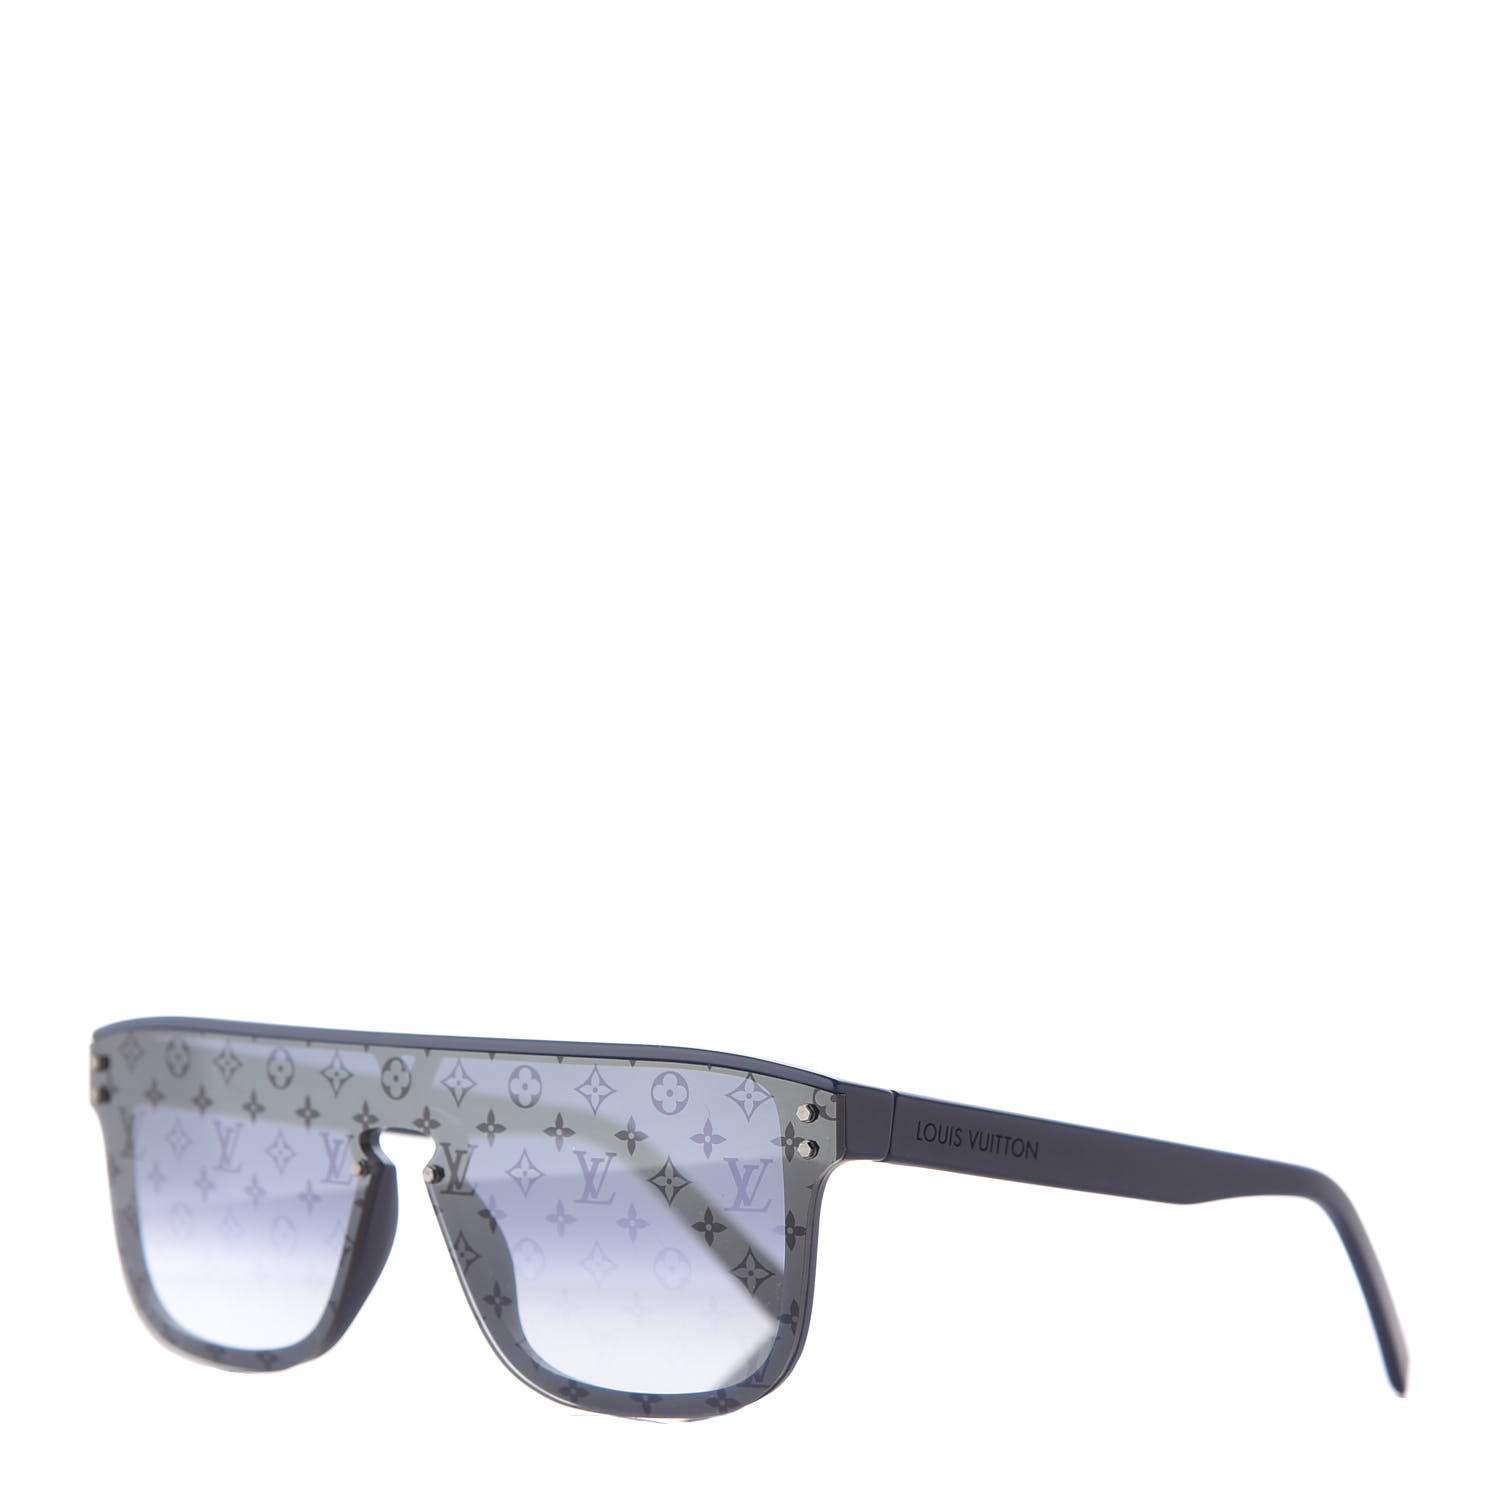 Z1082W LV WAIMEA Sunglasses UNBOXING & REVIEW 